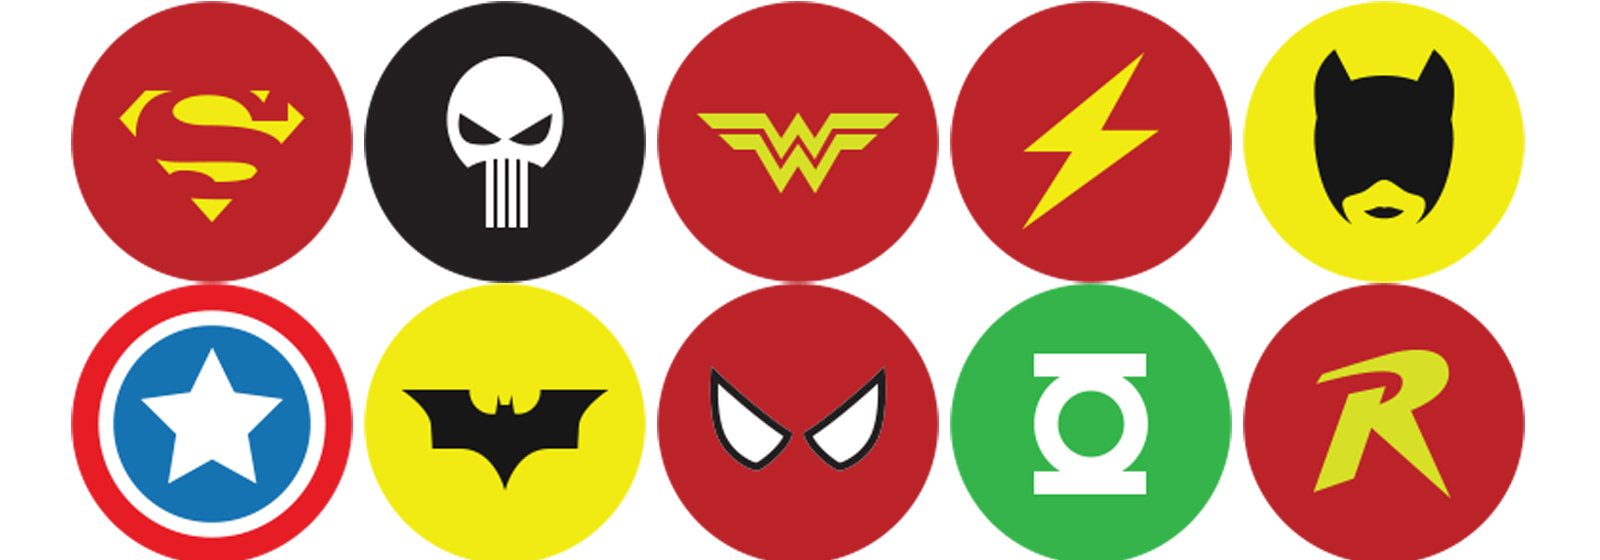 Am super heroes. Знаки супергероев. Эмблемы супергероев. Знаки героев Марвел. Супергеройские символы.